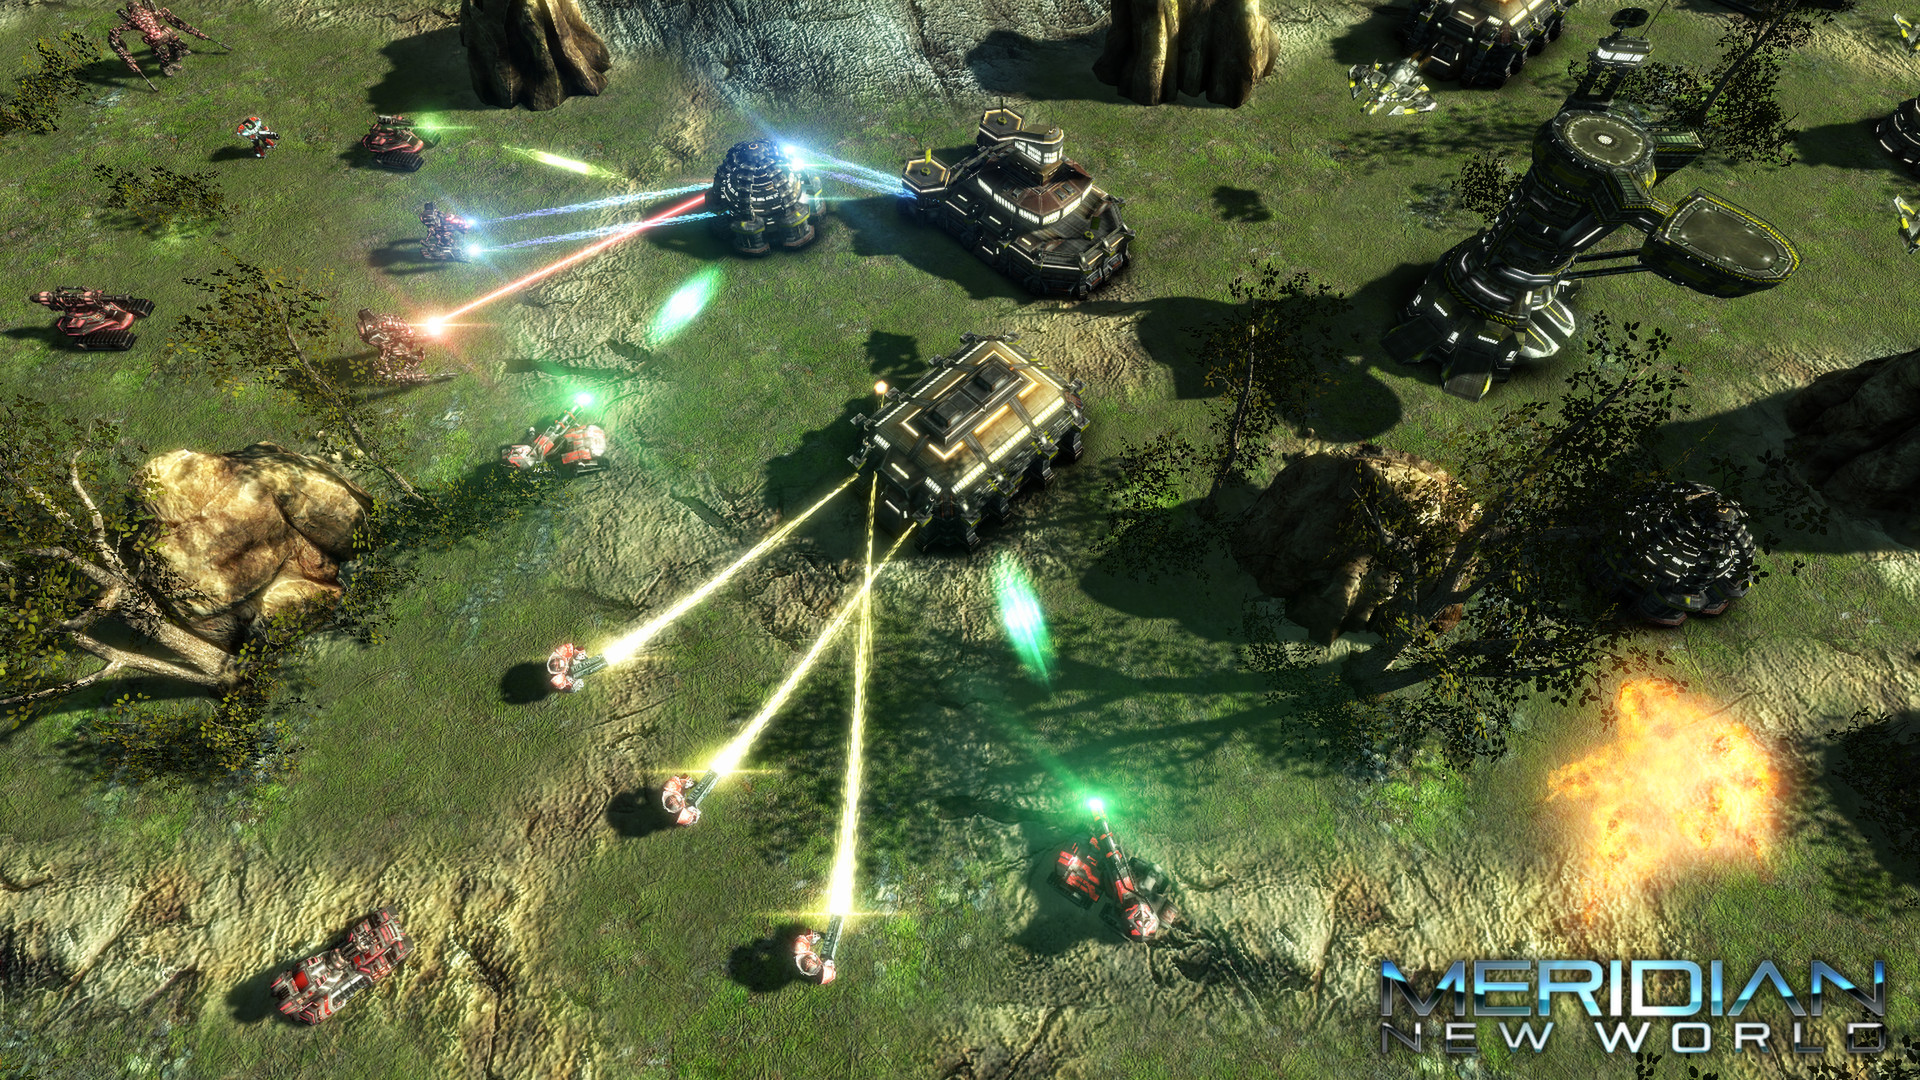 Screenshot for the game Meridian: New World [v 1.04] (2014) PC | RePack от R.G. Механики